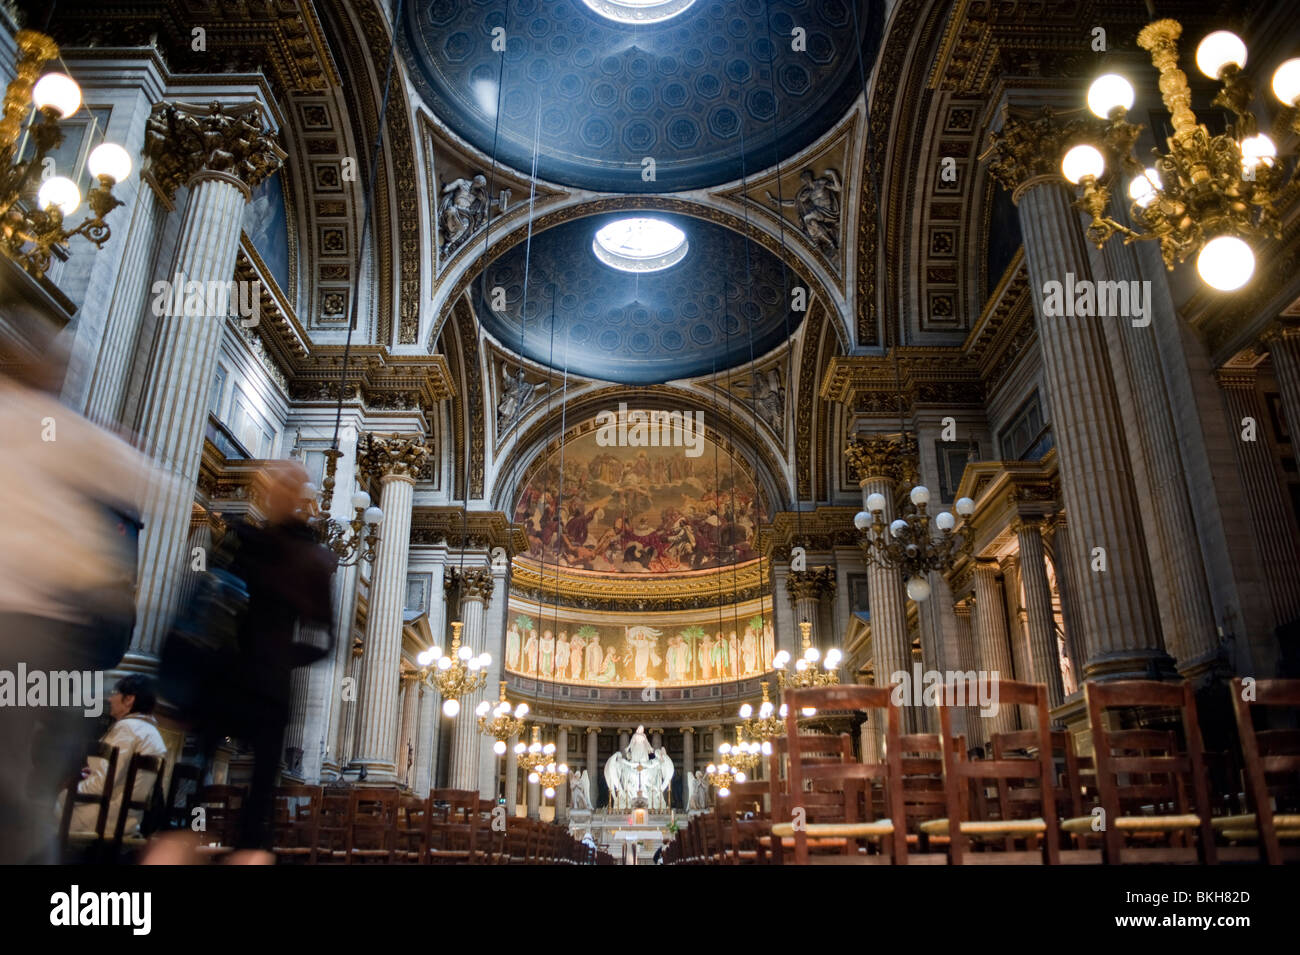 Madeleine Church, 'Eglise de la Madeleine', Paris, France, 'Roman Temple' Architecture, French Catholic Church, inside Stock Photo